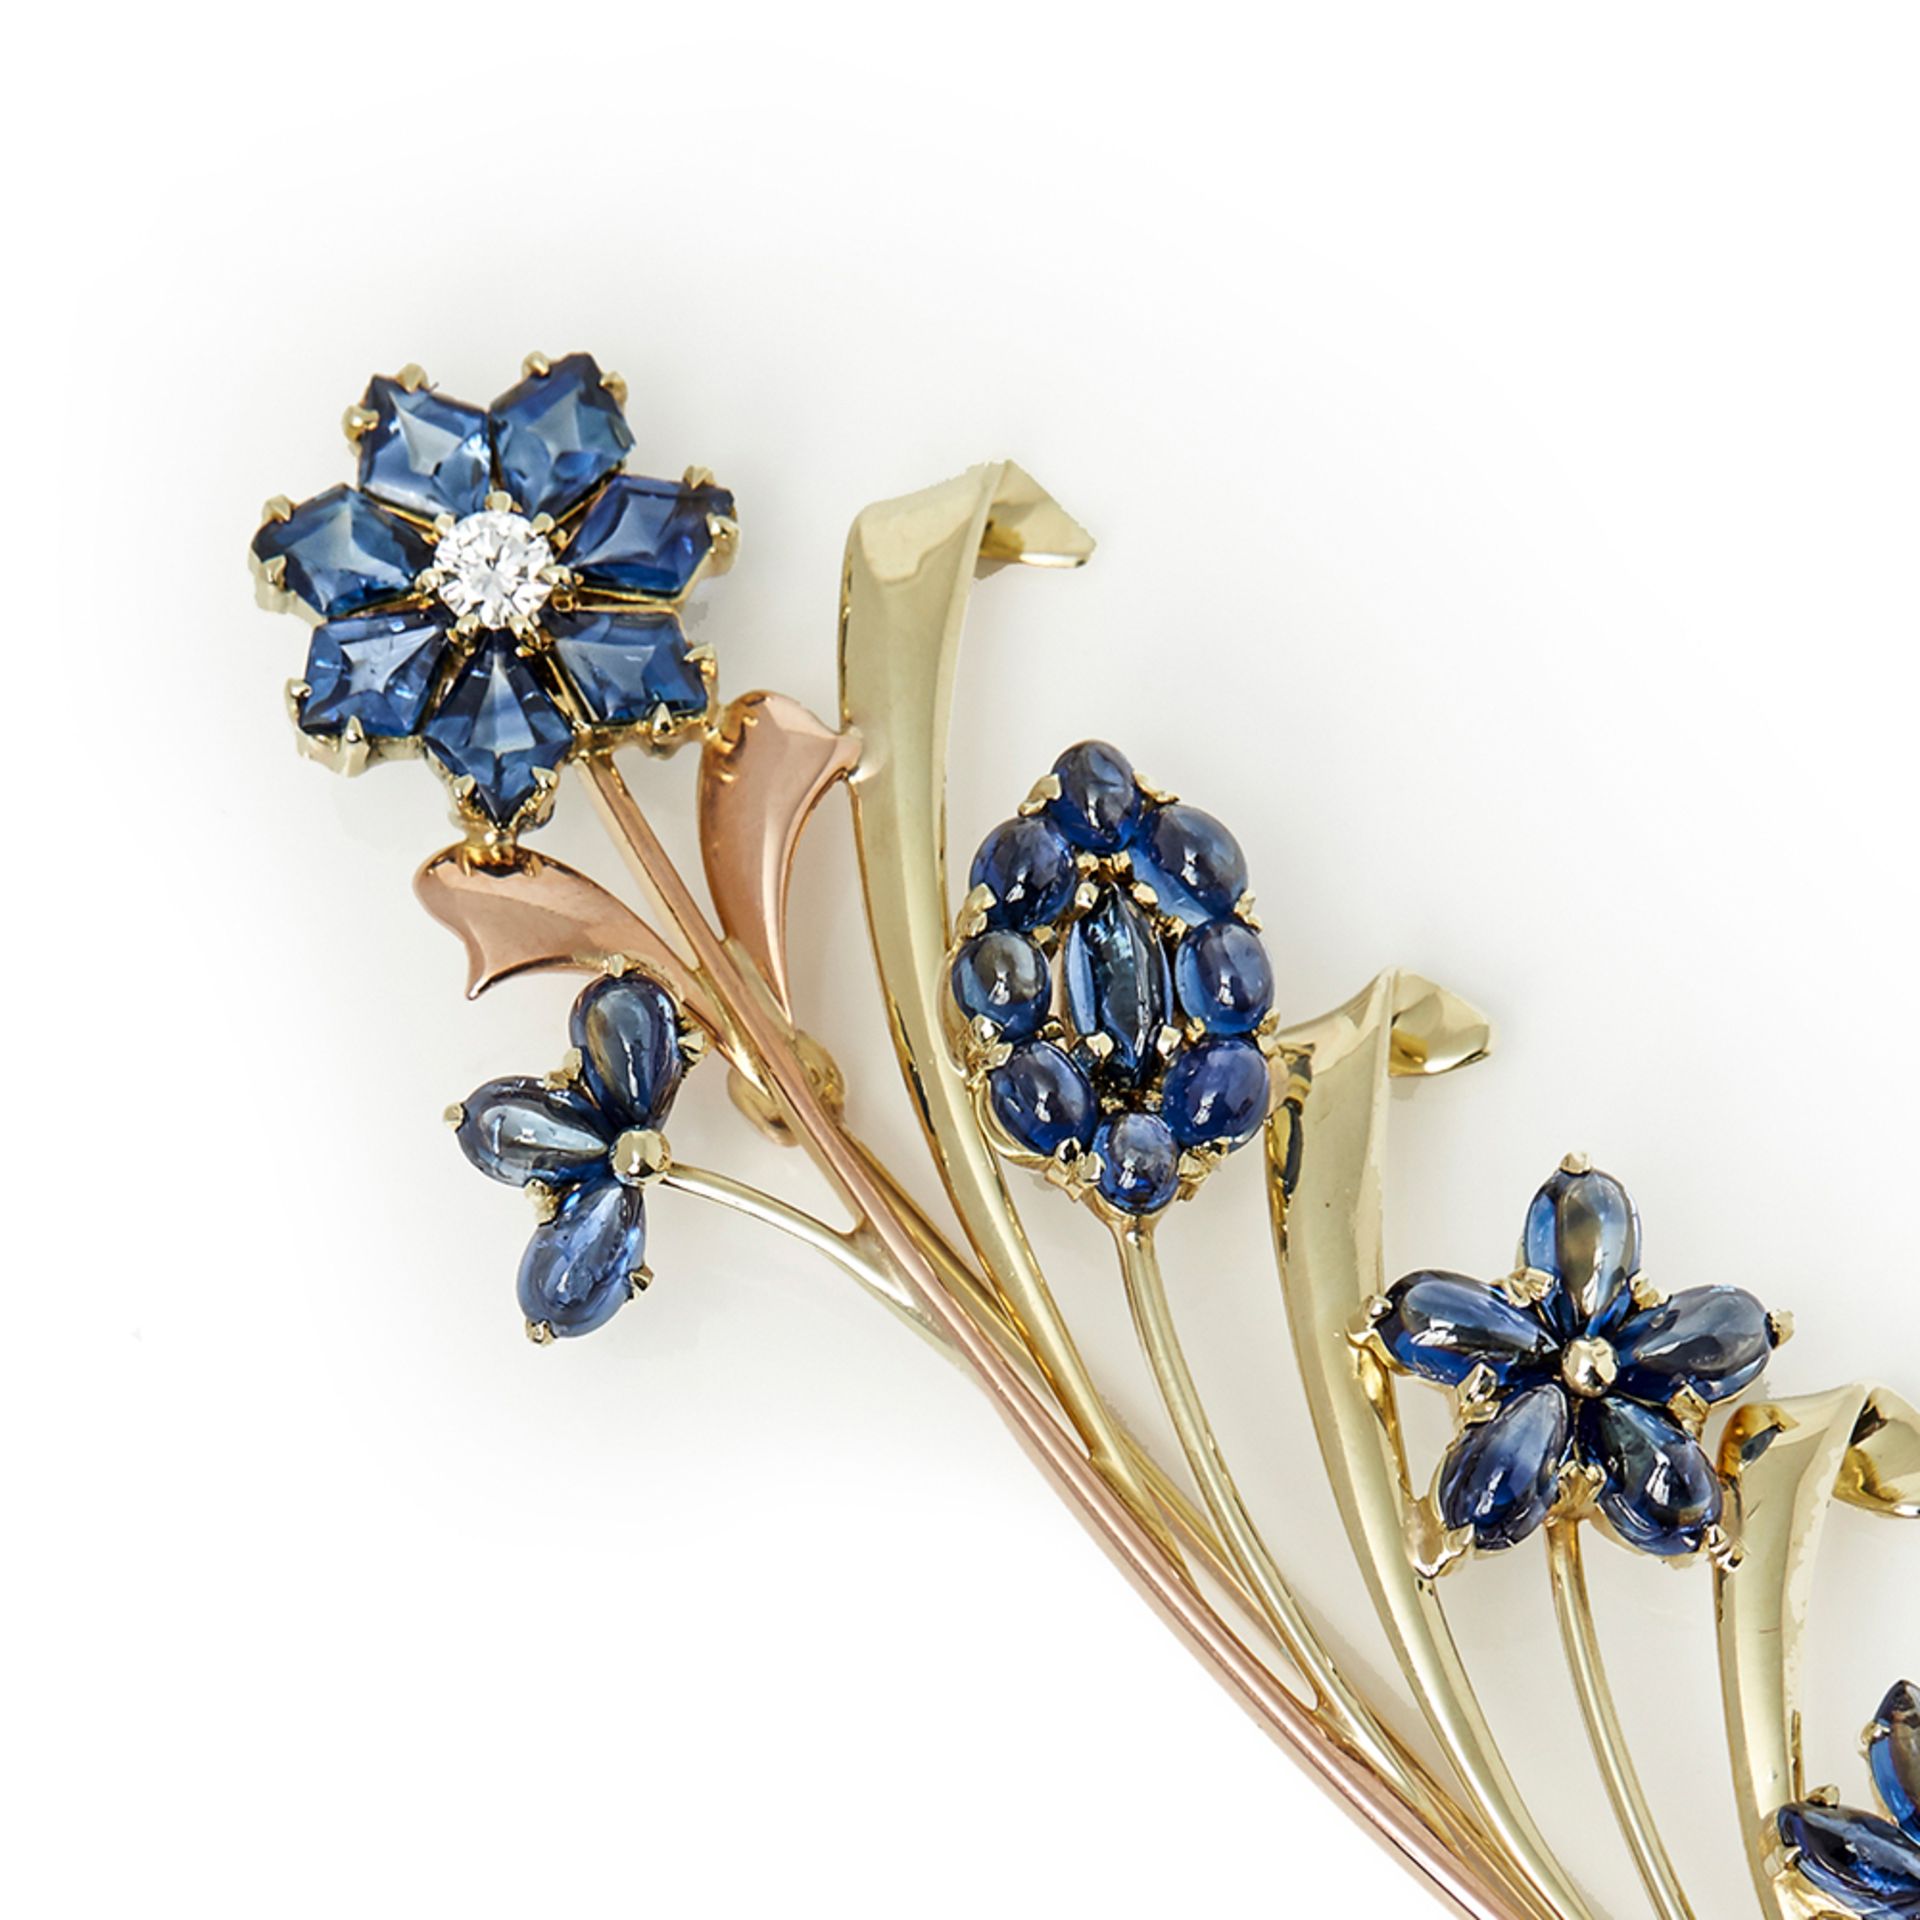 Tiffany & Co. 14k Yellow & Rose Gold Sapphire & Diamond Retro Brooch - Image 3 of 7